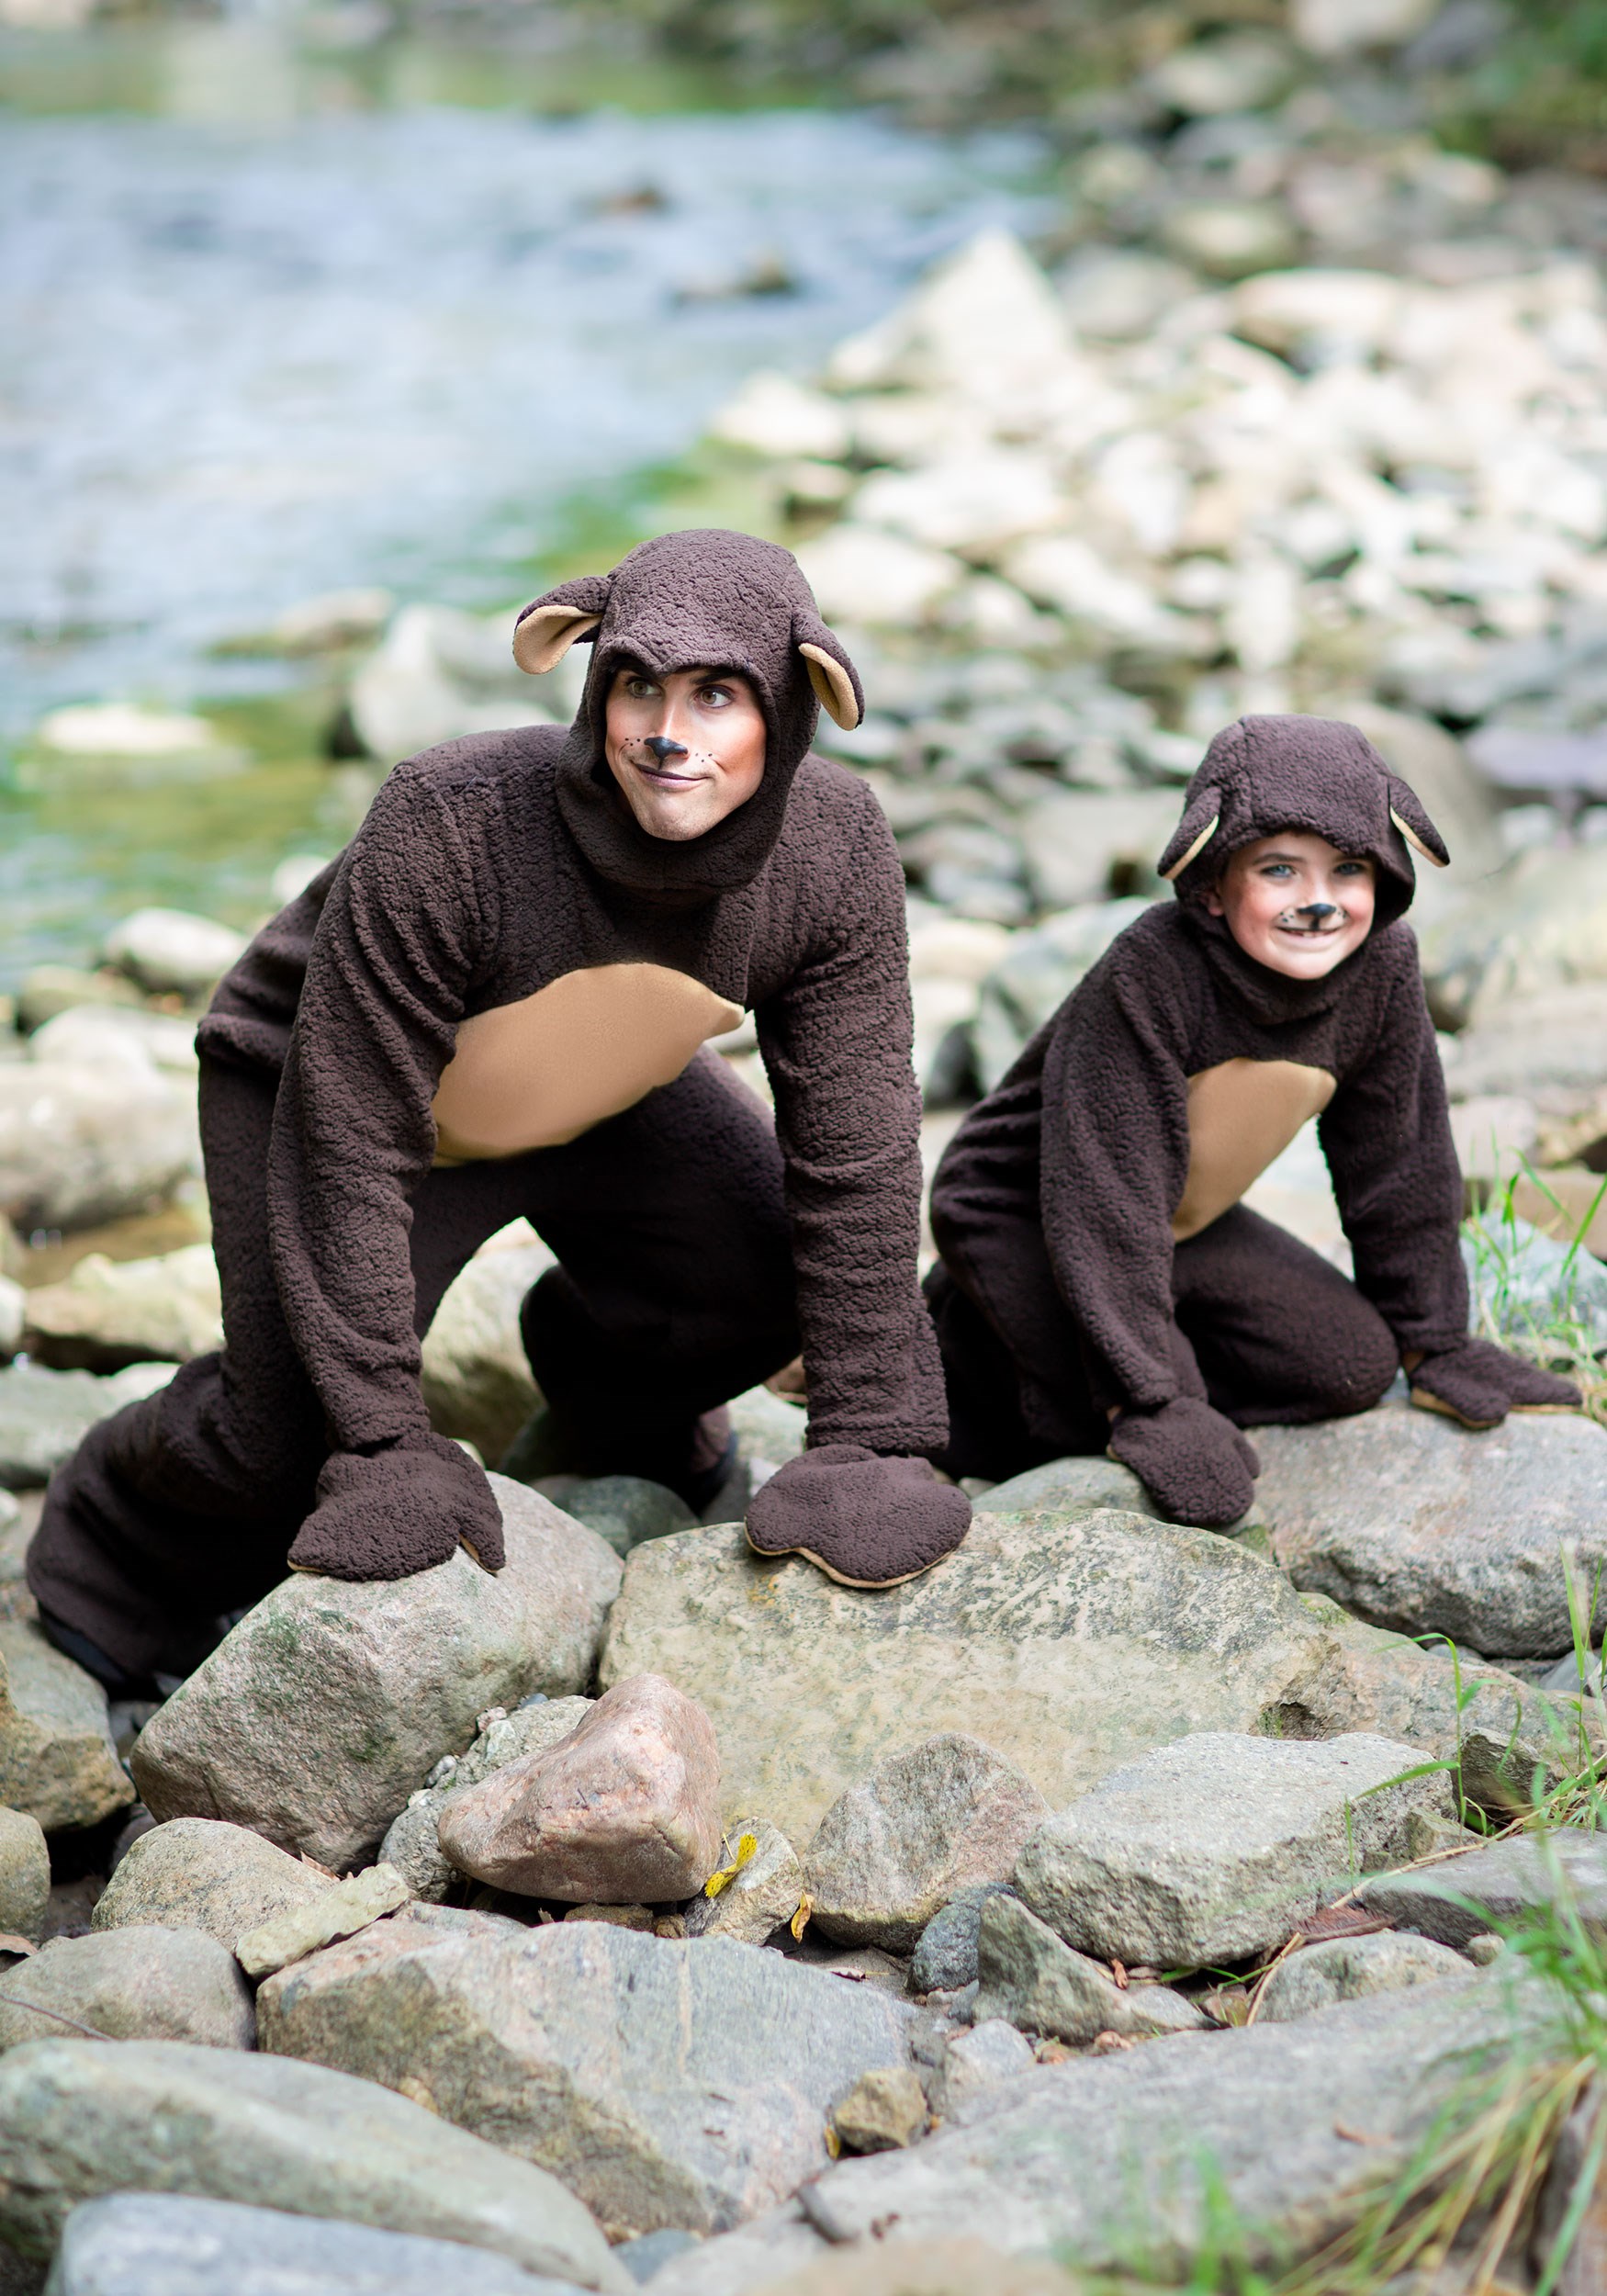 Little Brown Bear Costume For Kids